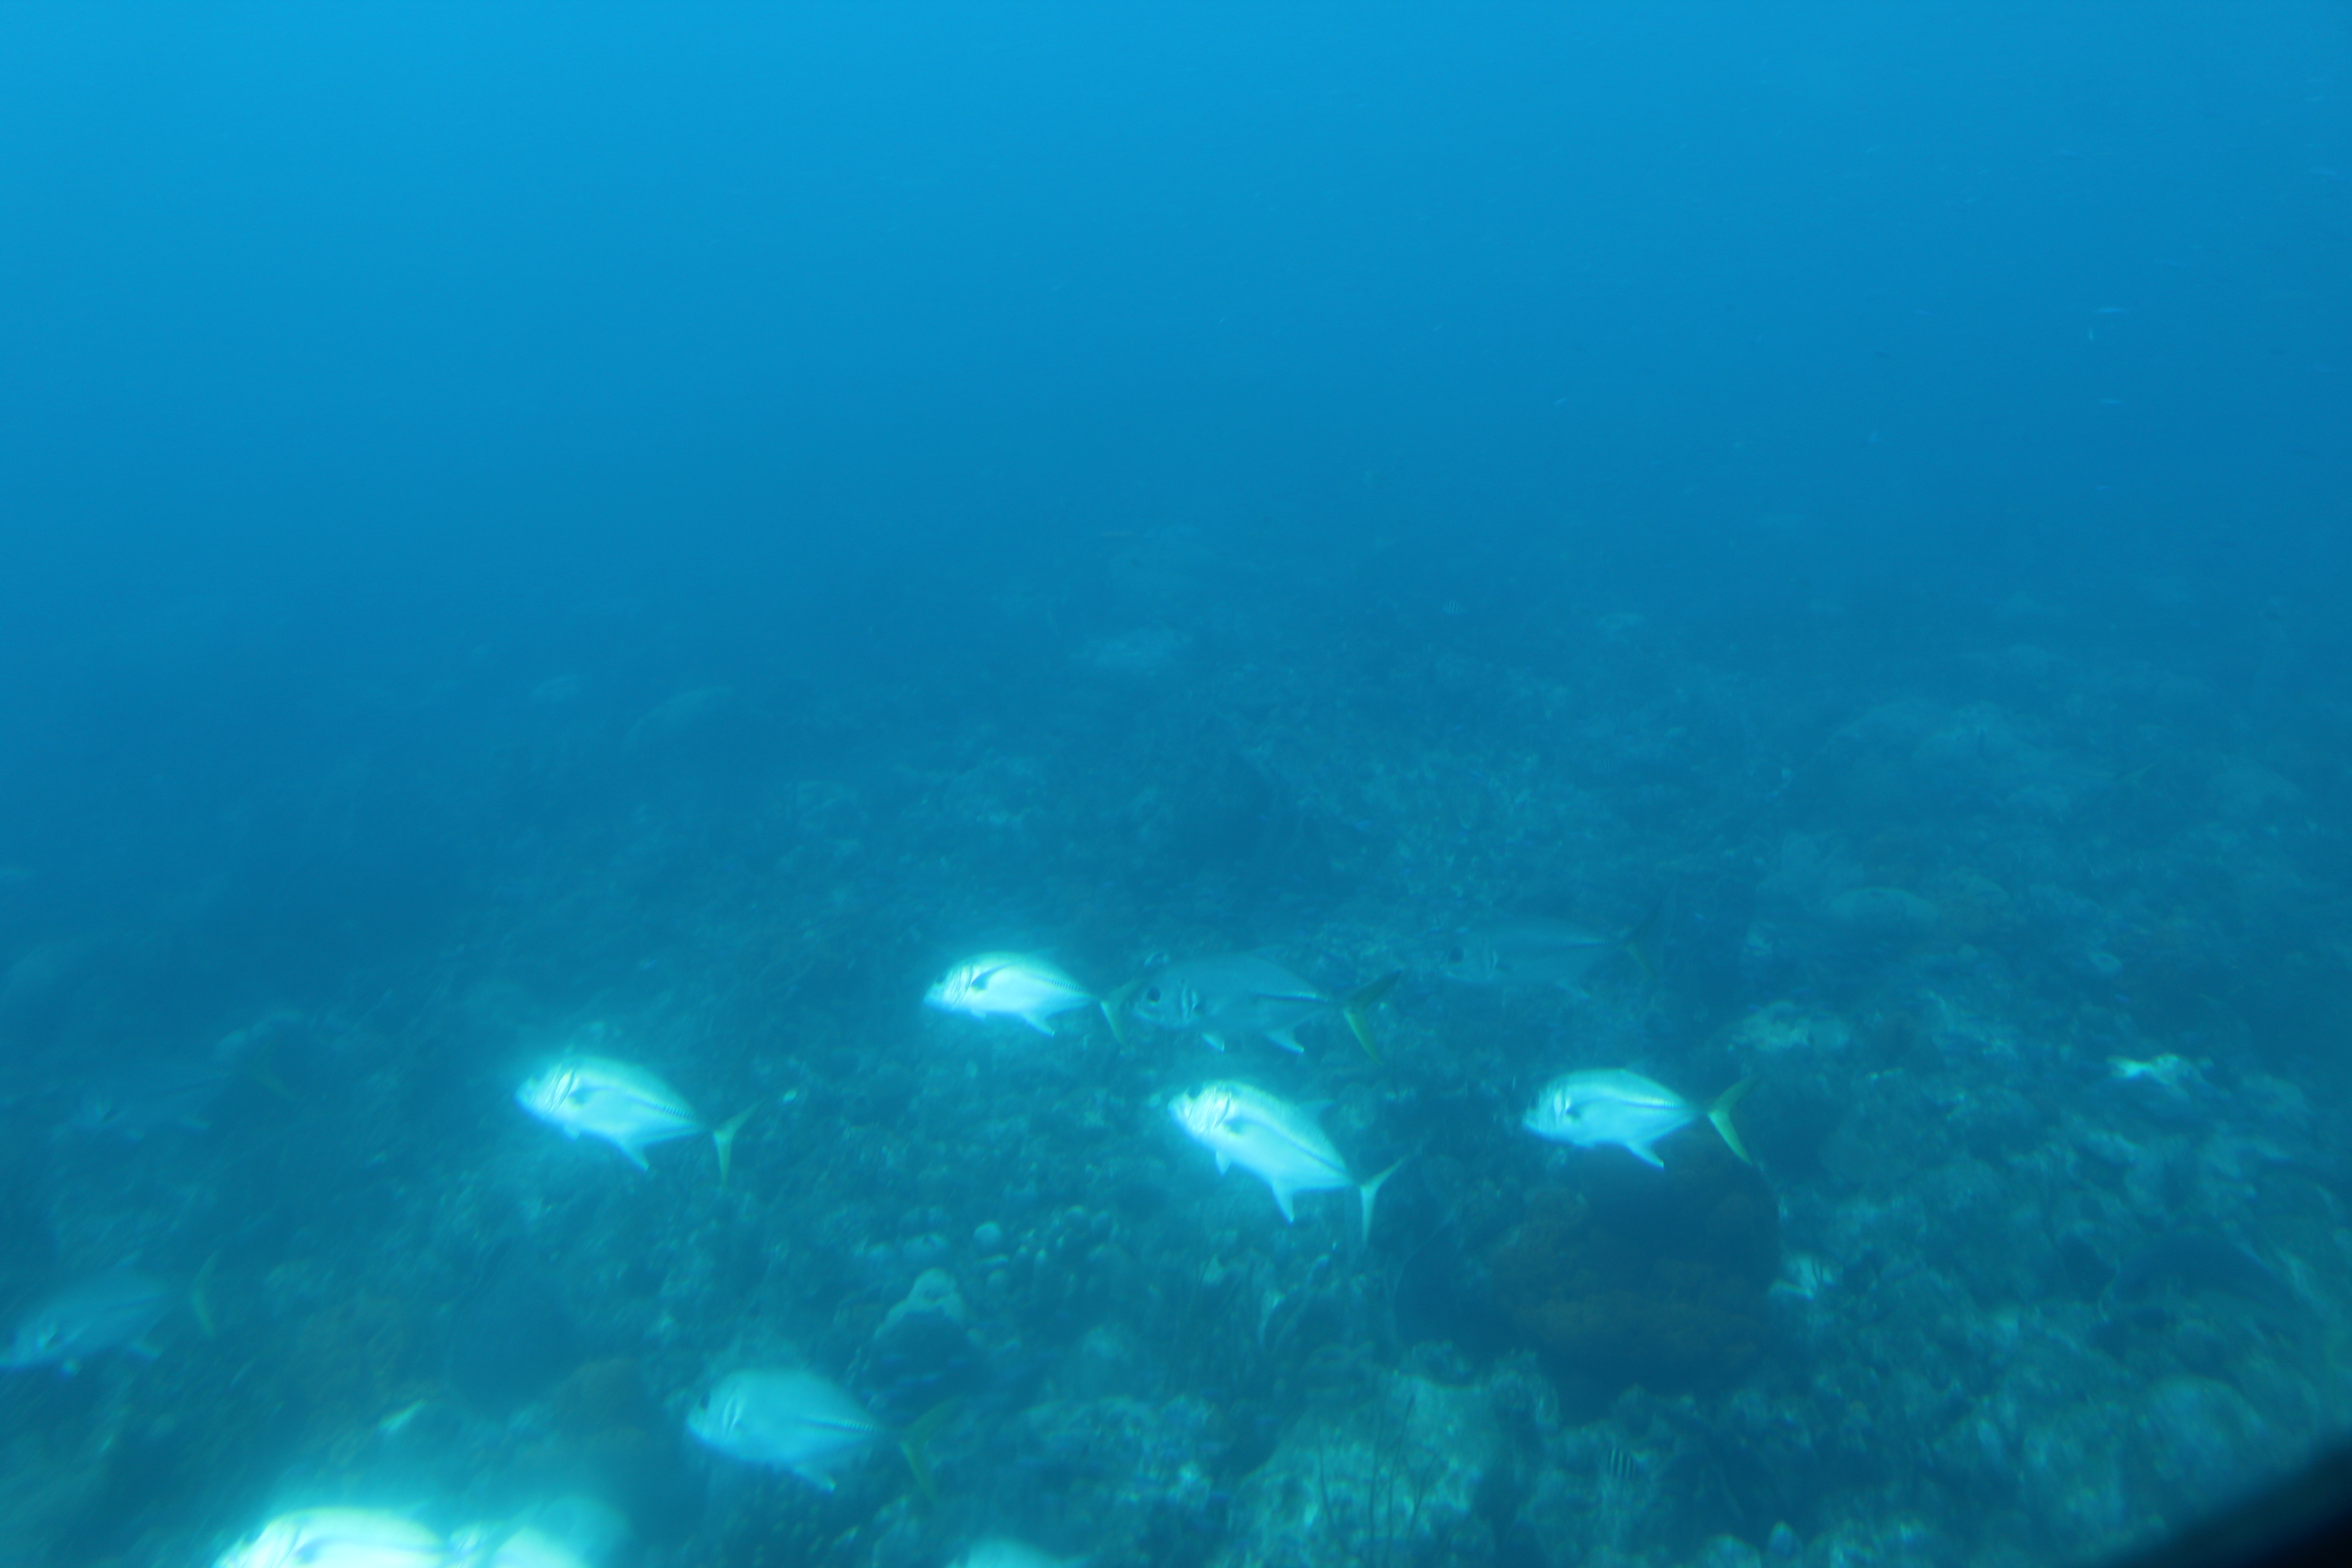 A school of Jacks darting through the reef